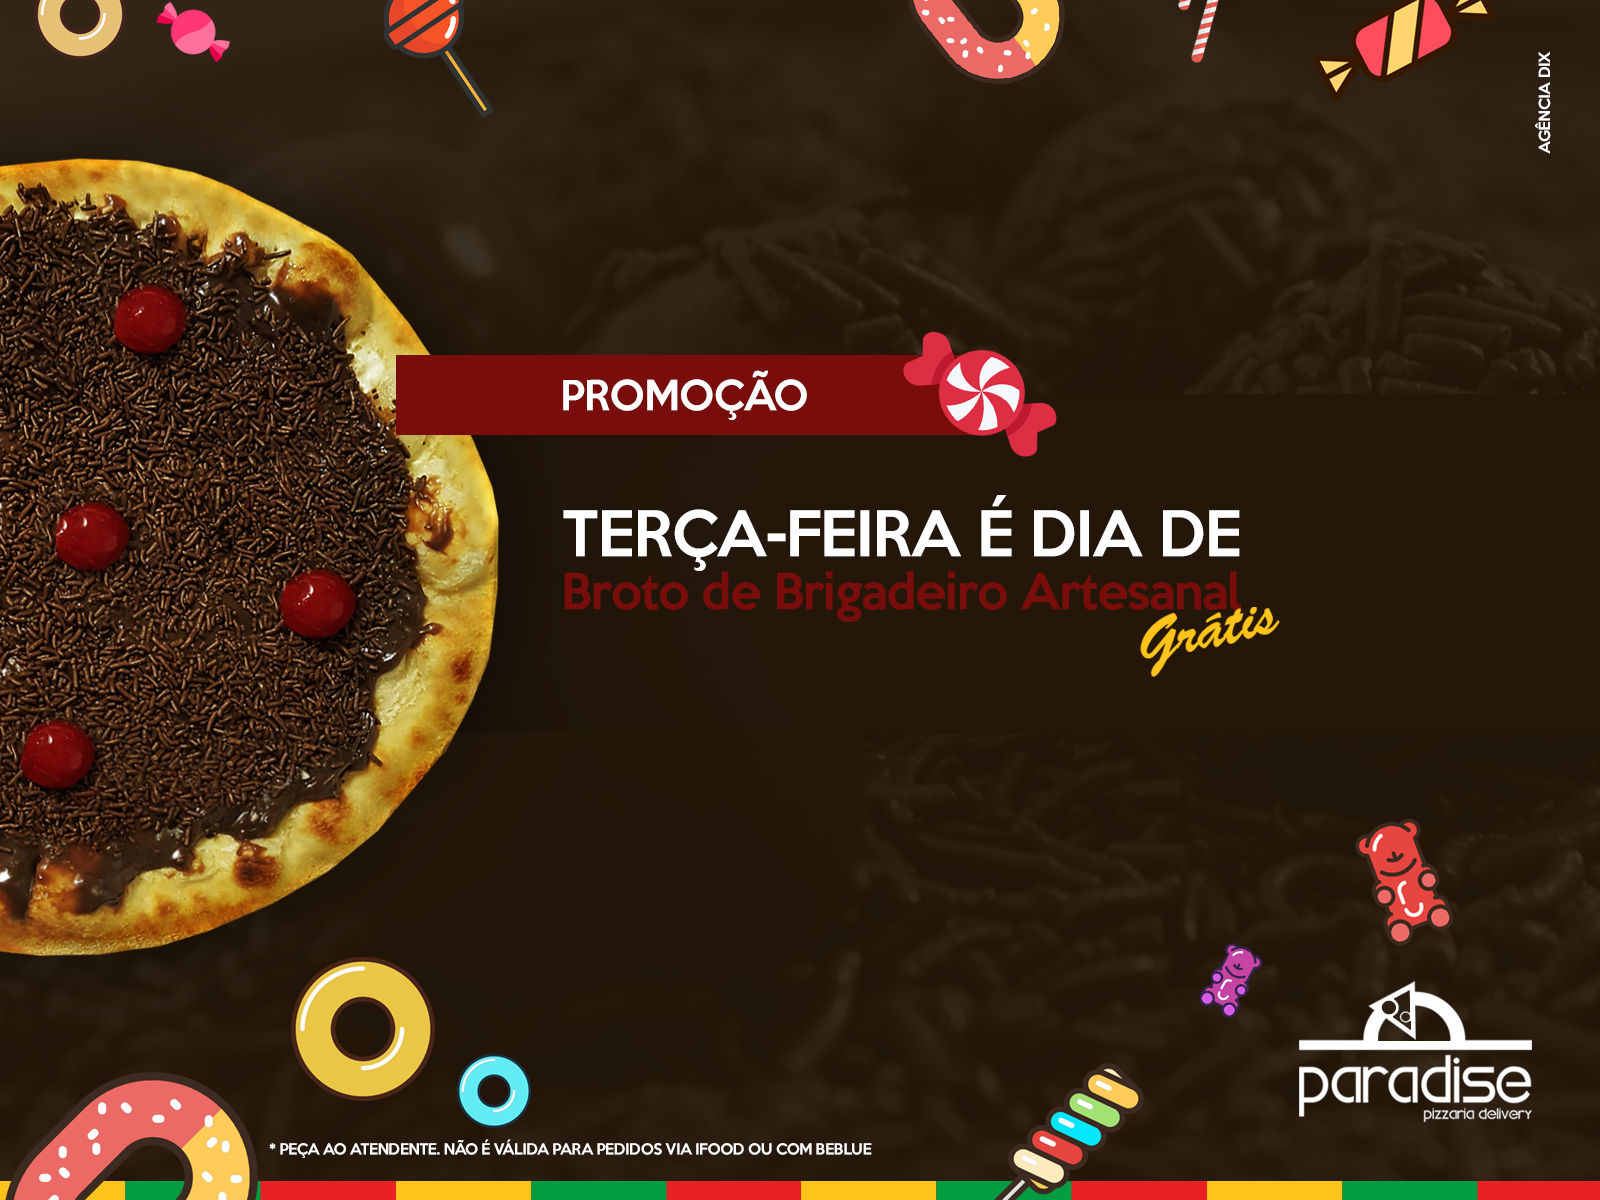 Promoo de Pizza - Tera-feira - Broto de Brigadeiro Artesanal Grtis